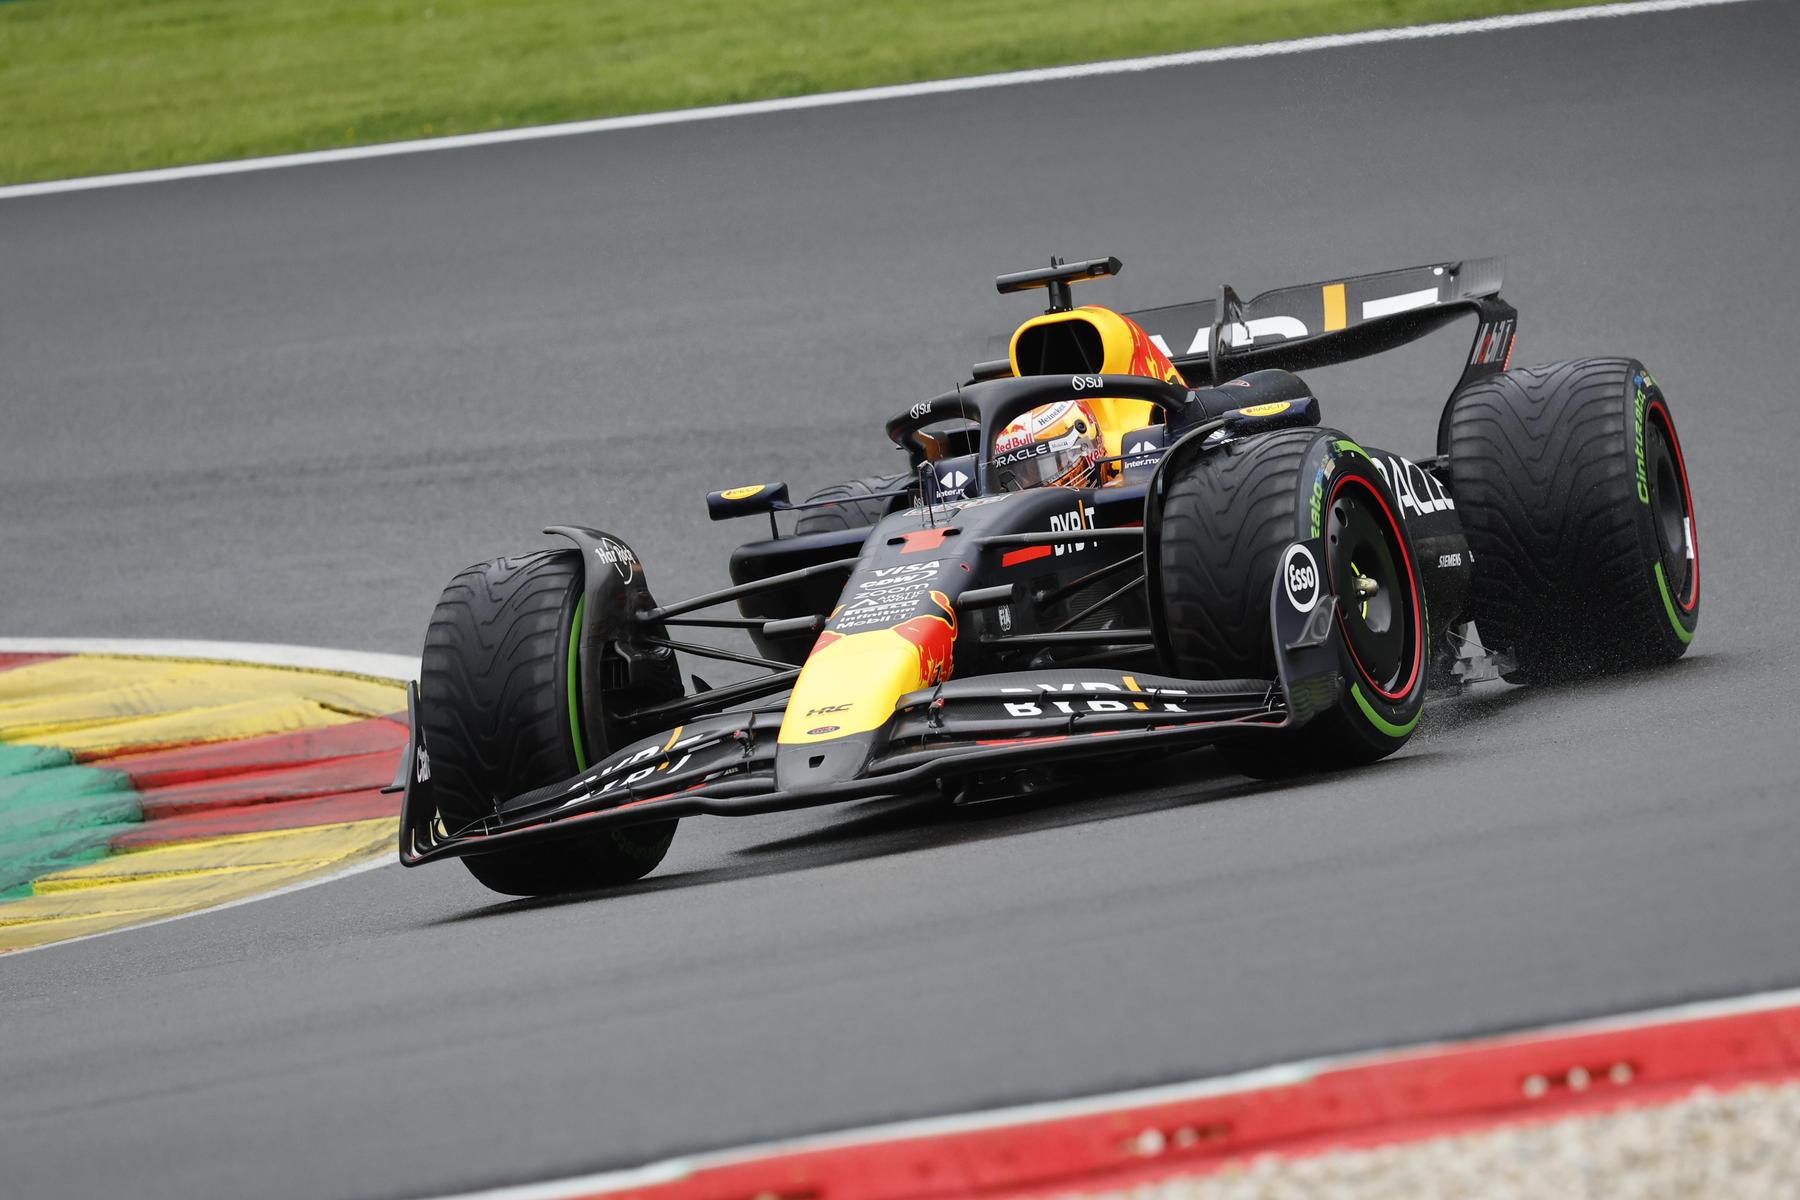 Formel 1 in Belgien: Das Qualifying in Spa-Francorchamps im Liveticker!